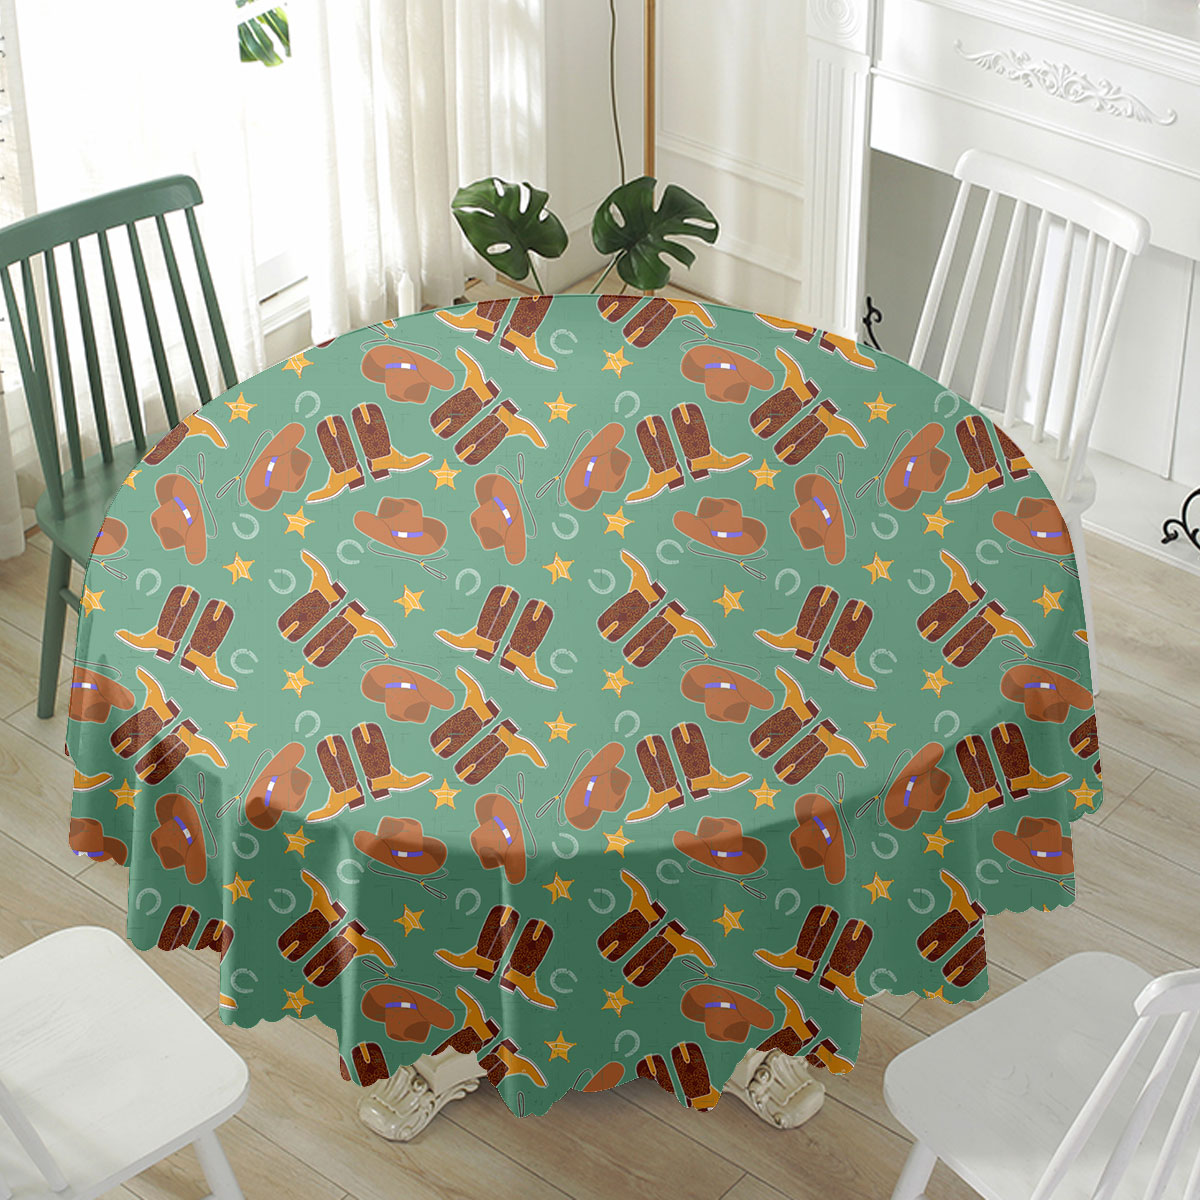 Cowboy Pattern 6 Waterproof Tablecloth